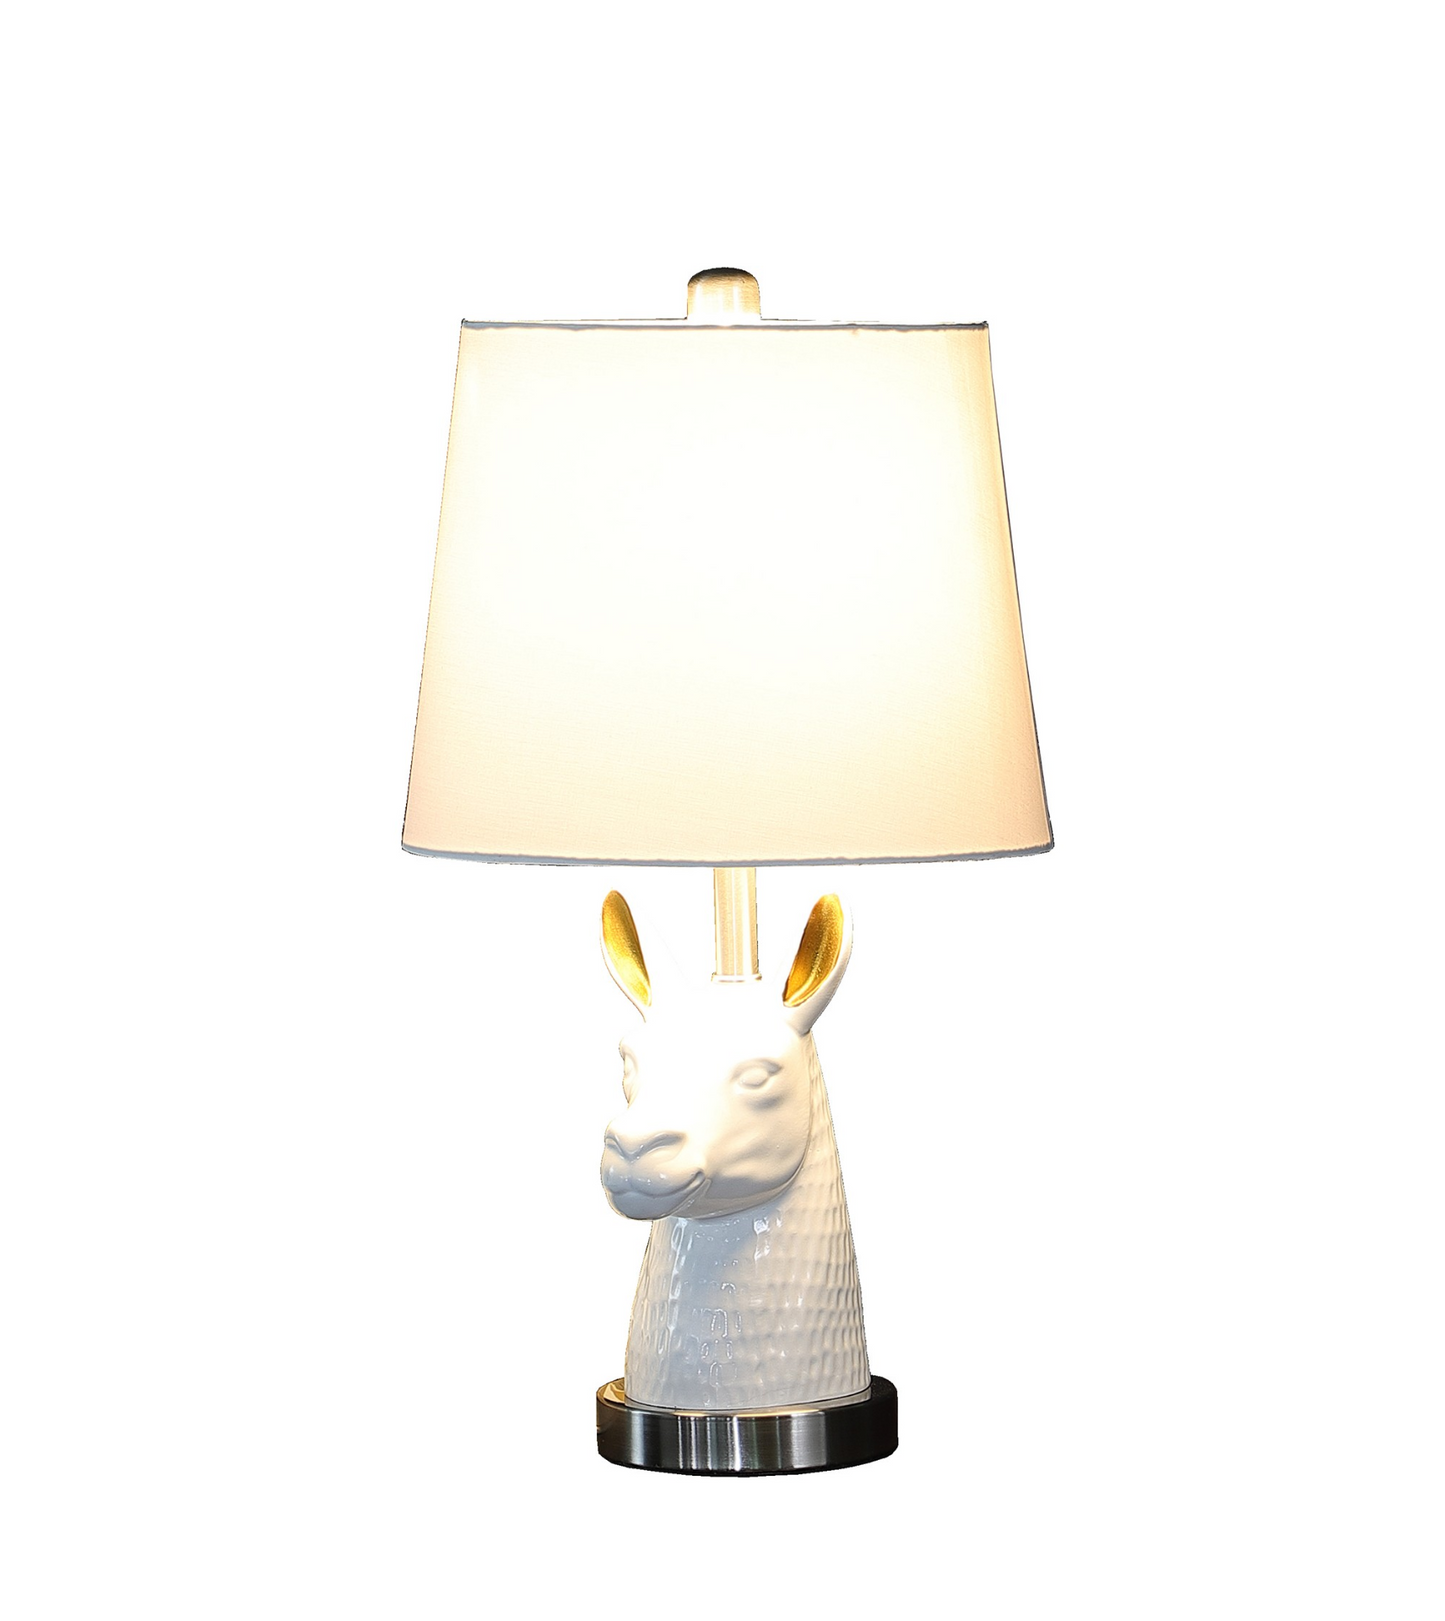 Llama Table Lamp - 21” White